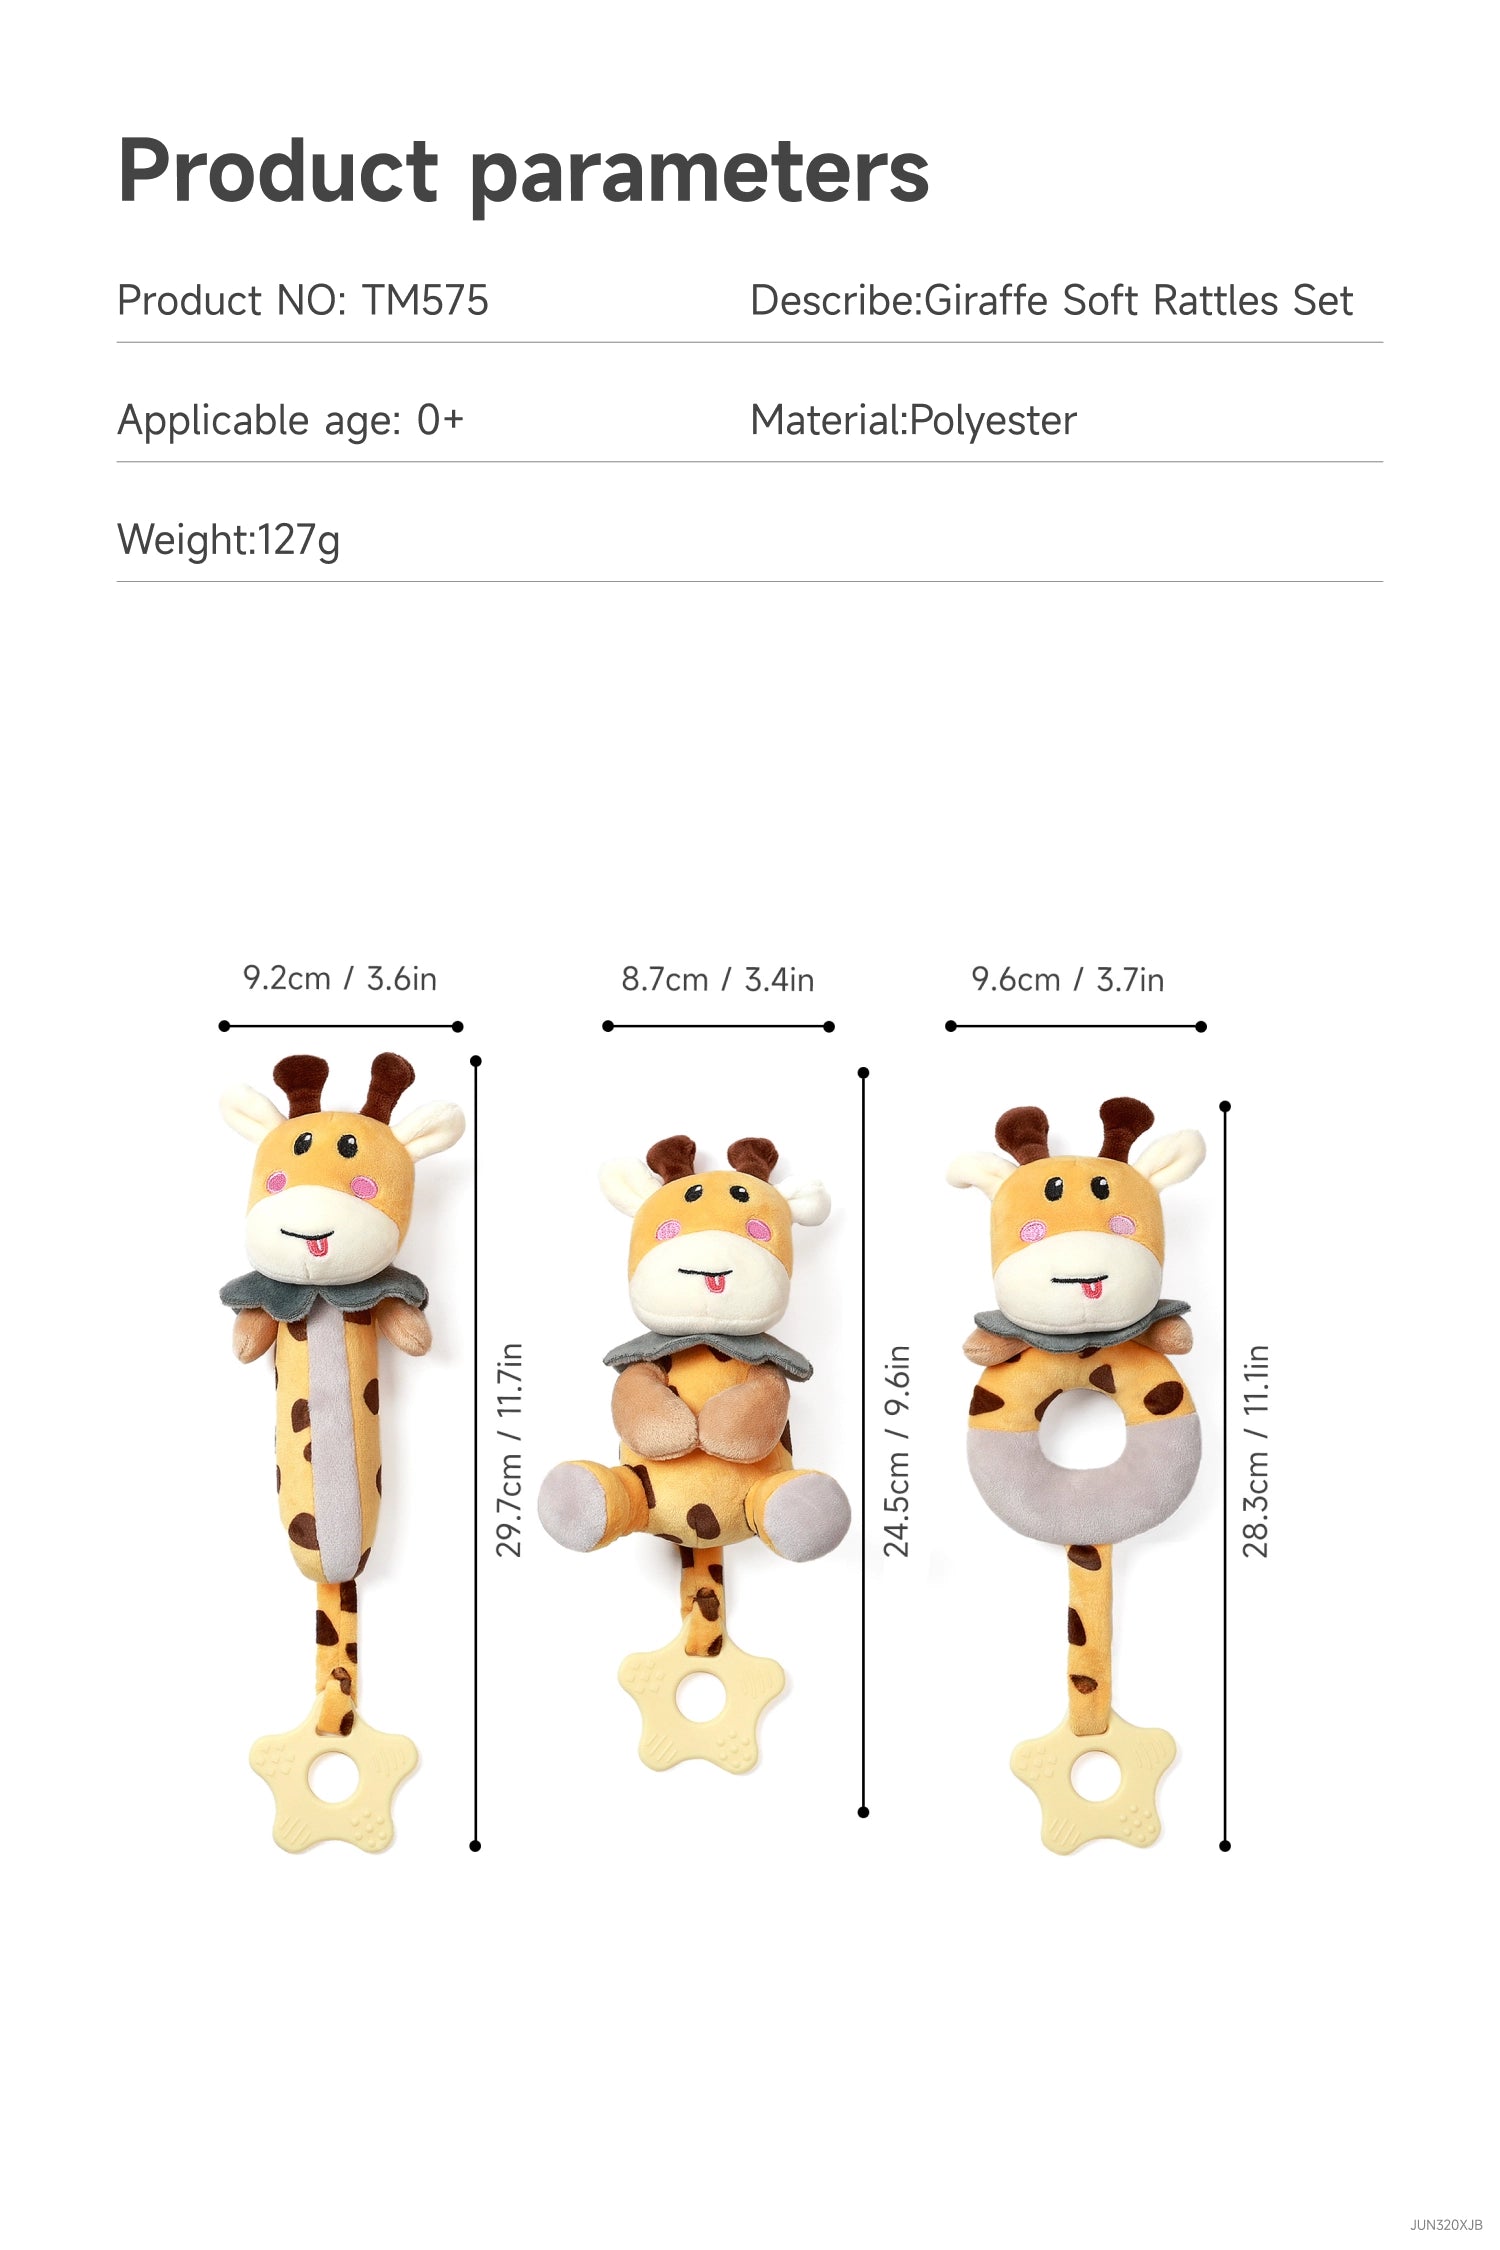 3pcs sensory plush set featuring giraffe rattle for infants